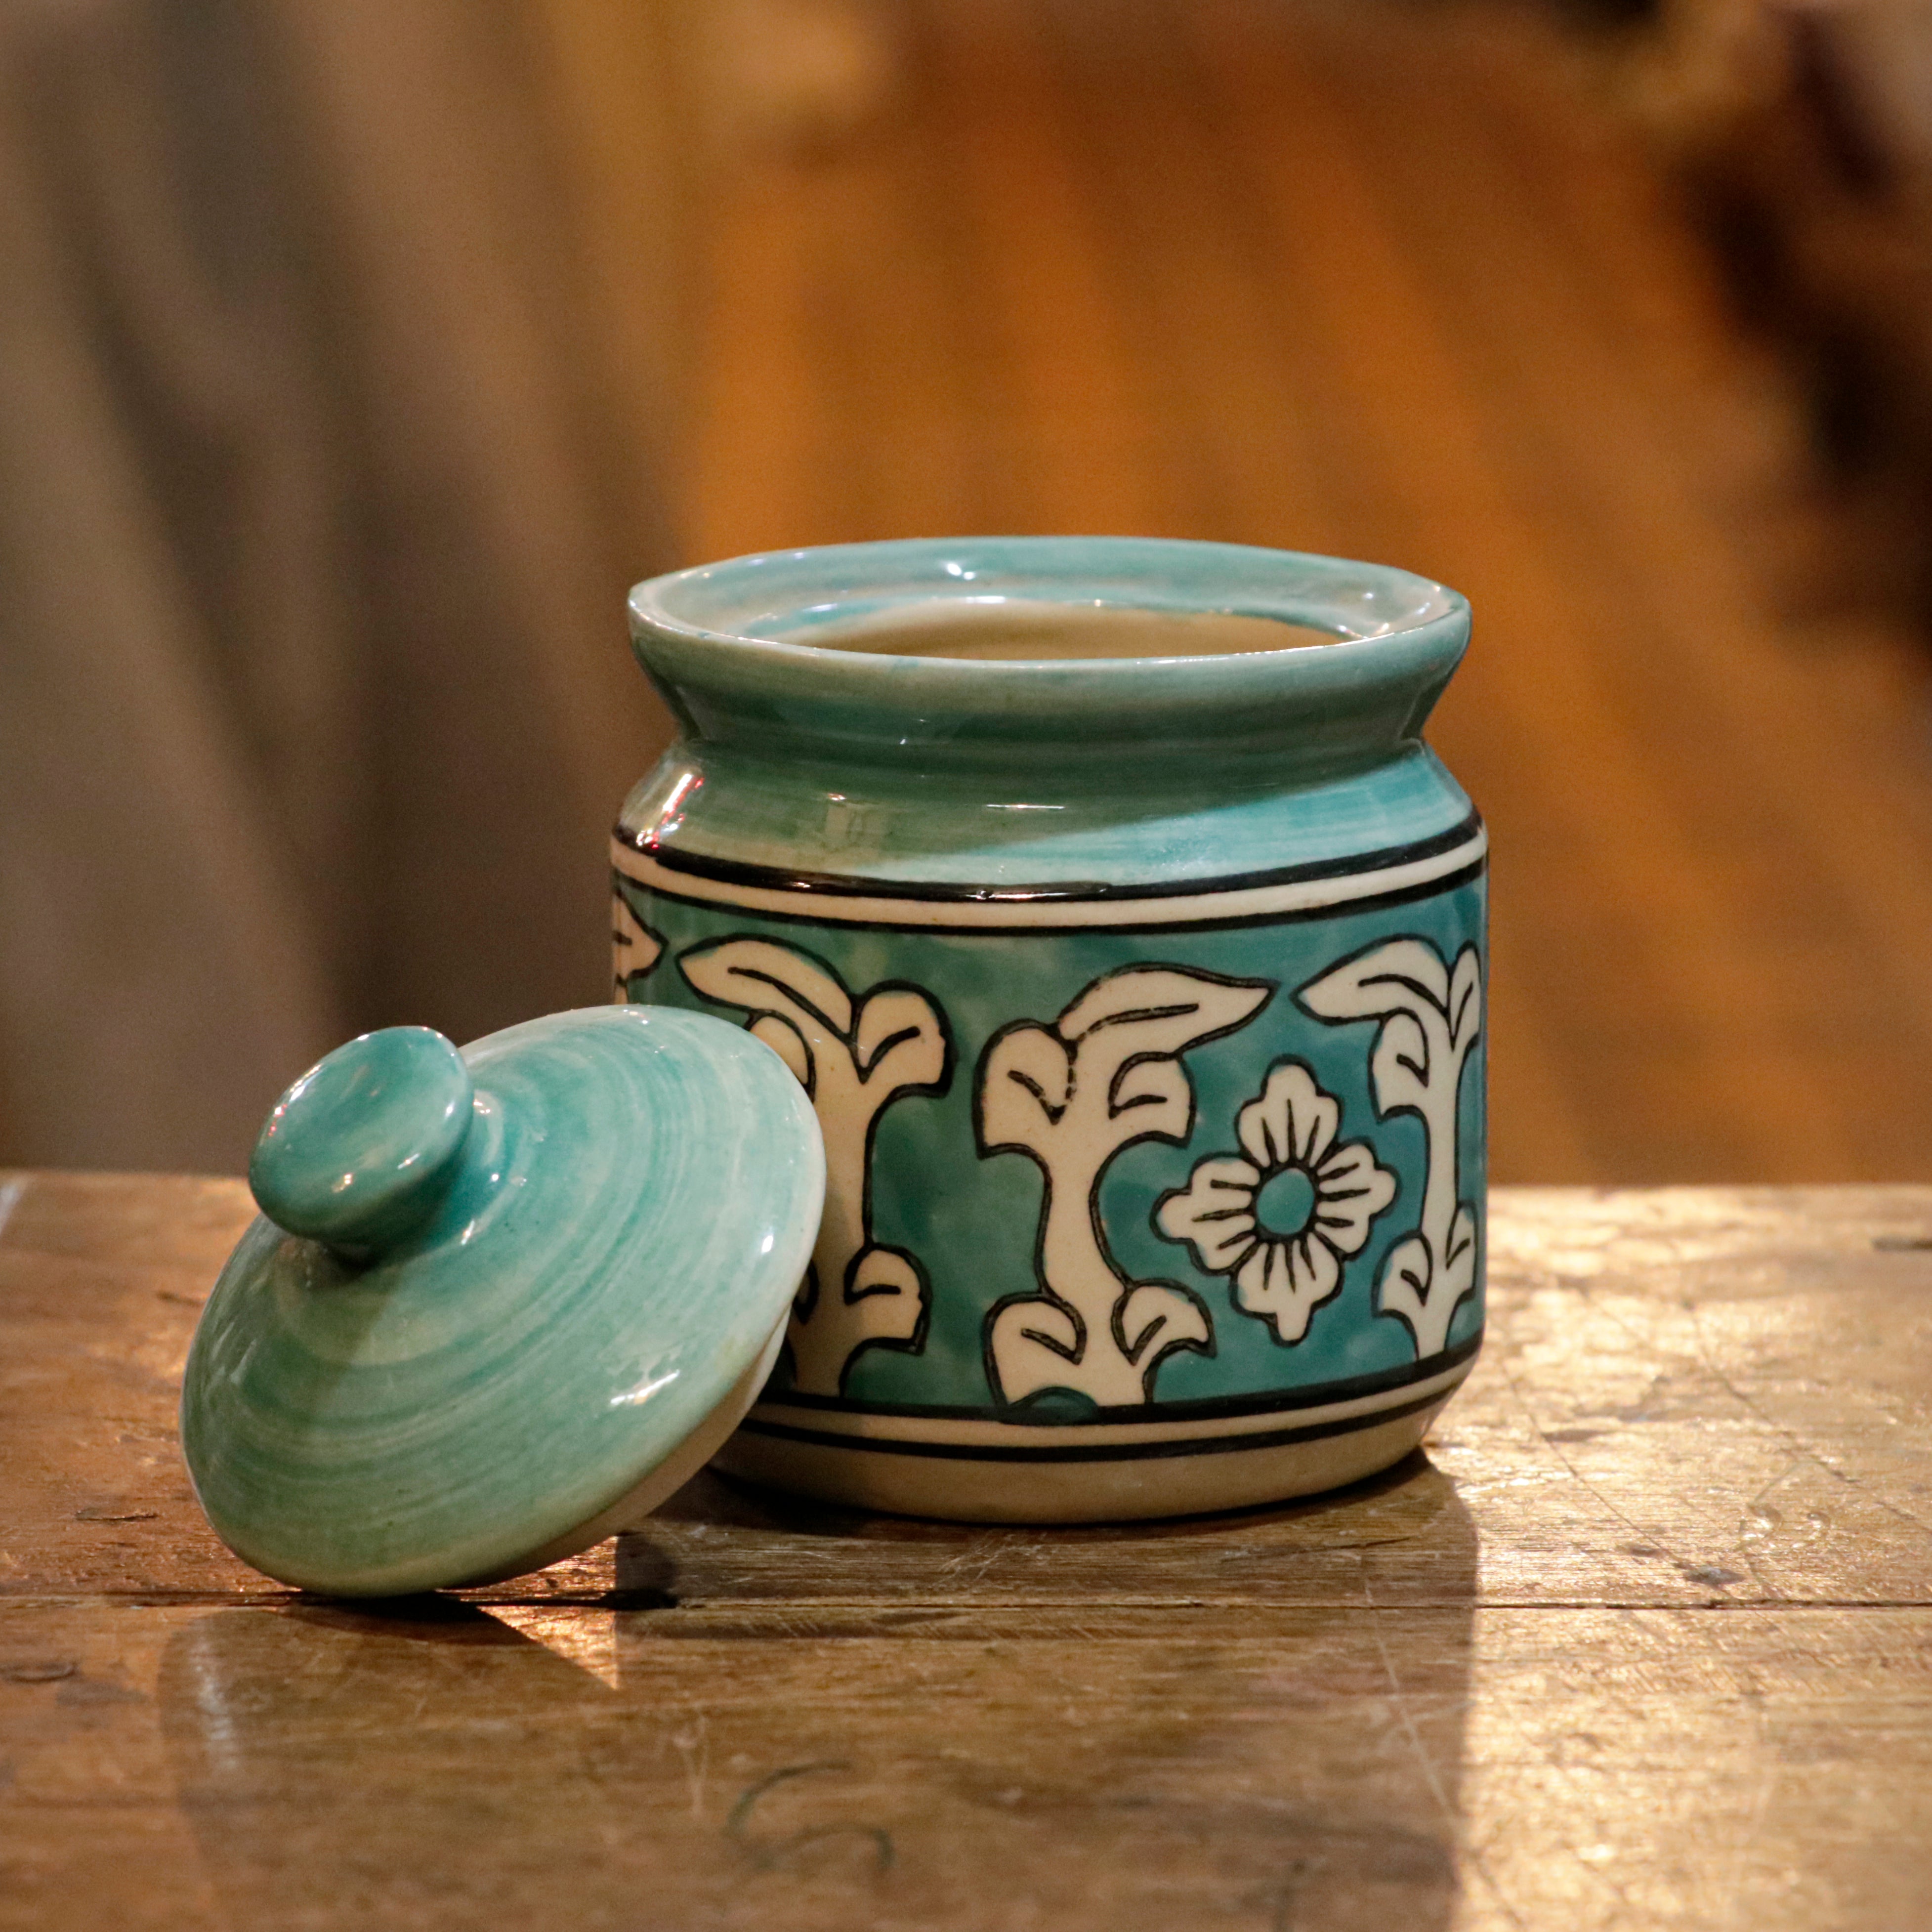 Irish Montage Flower Hand-Painted Ceramic Pickle Storage Jar - Medium Ceramic jar